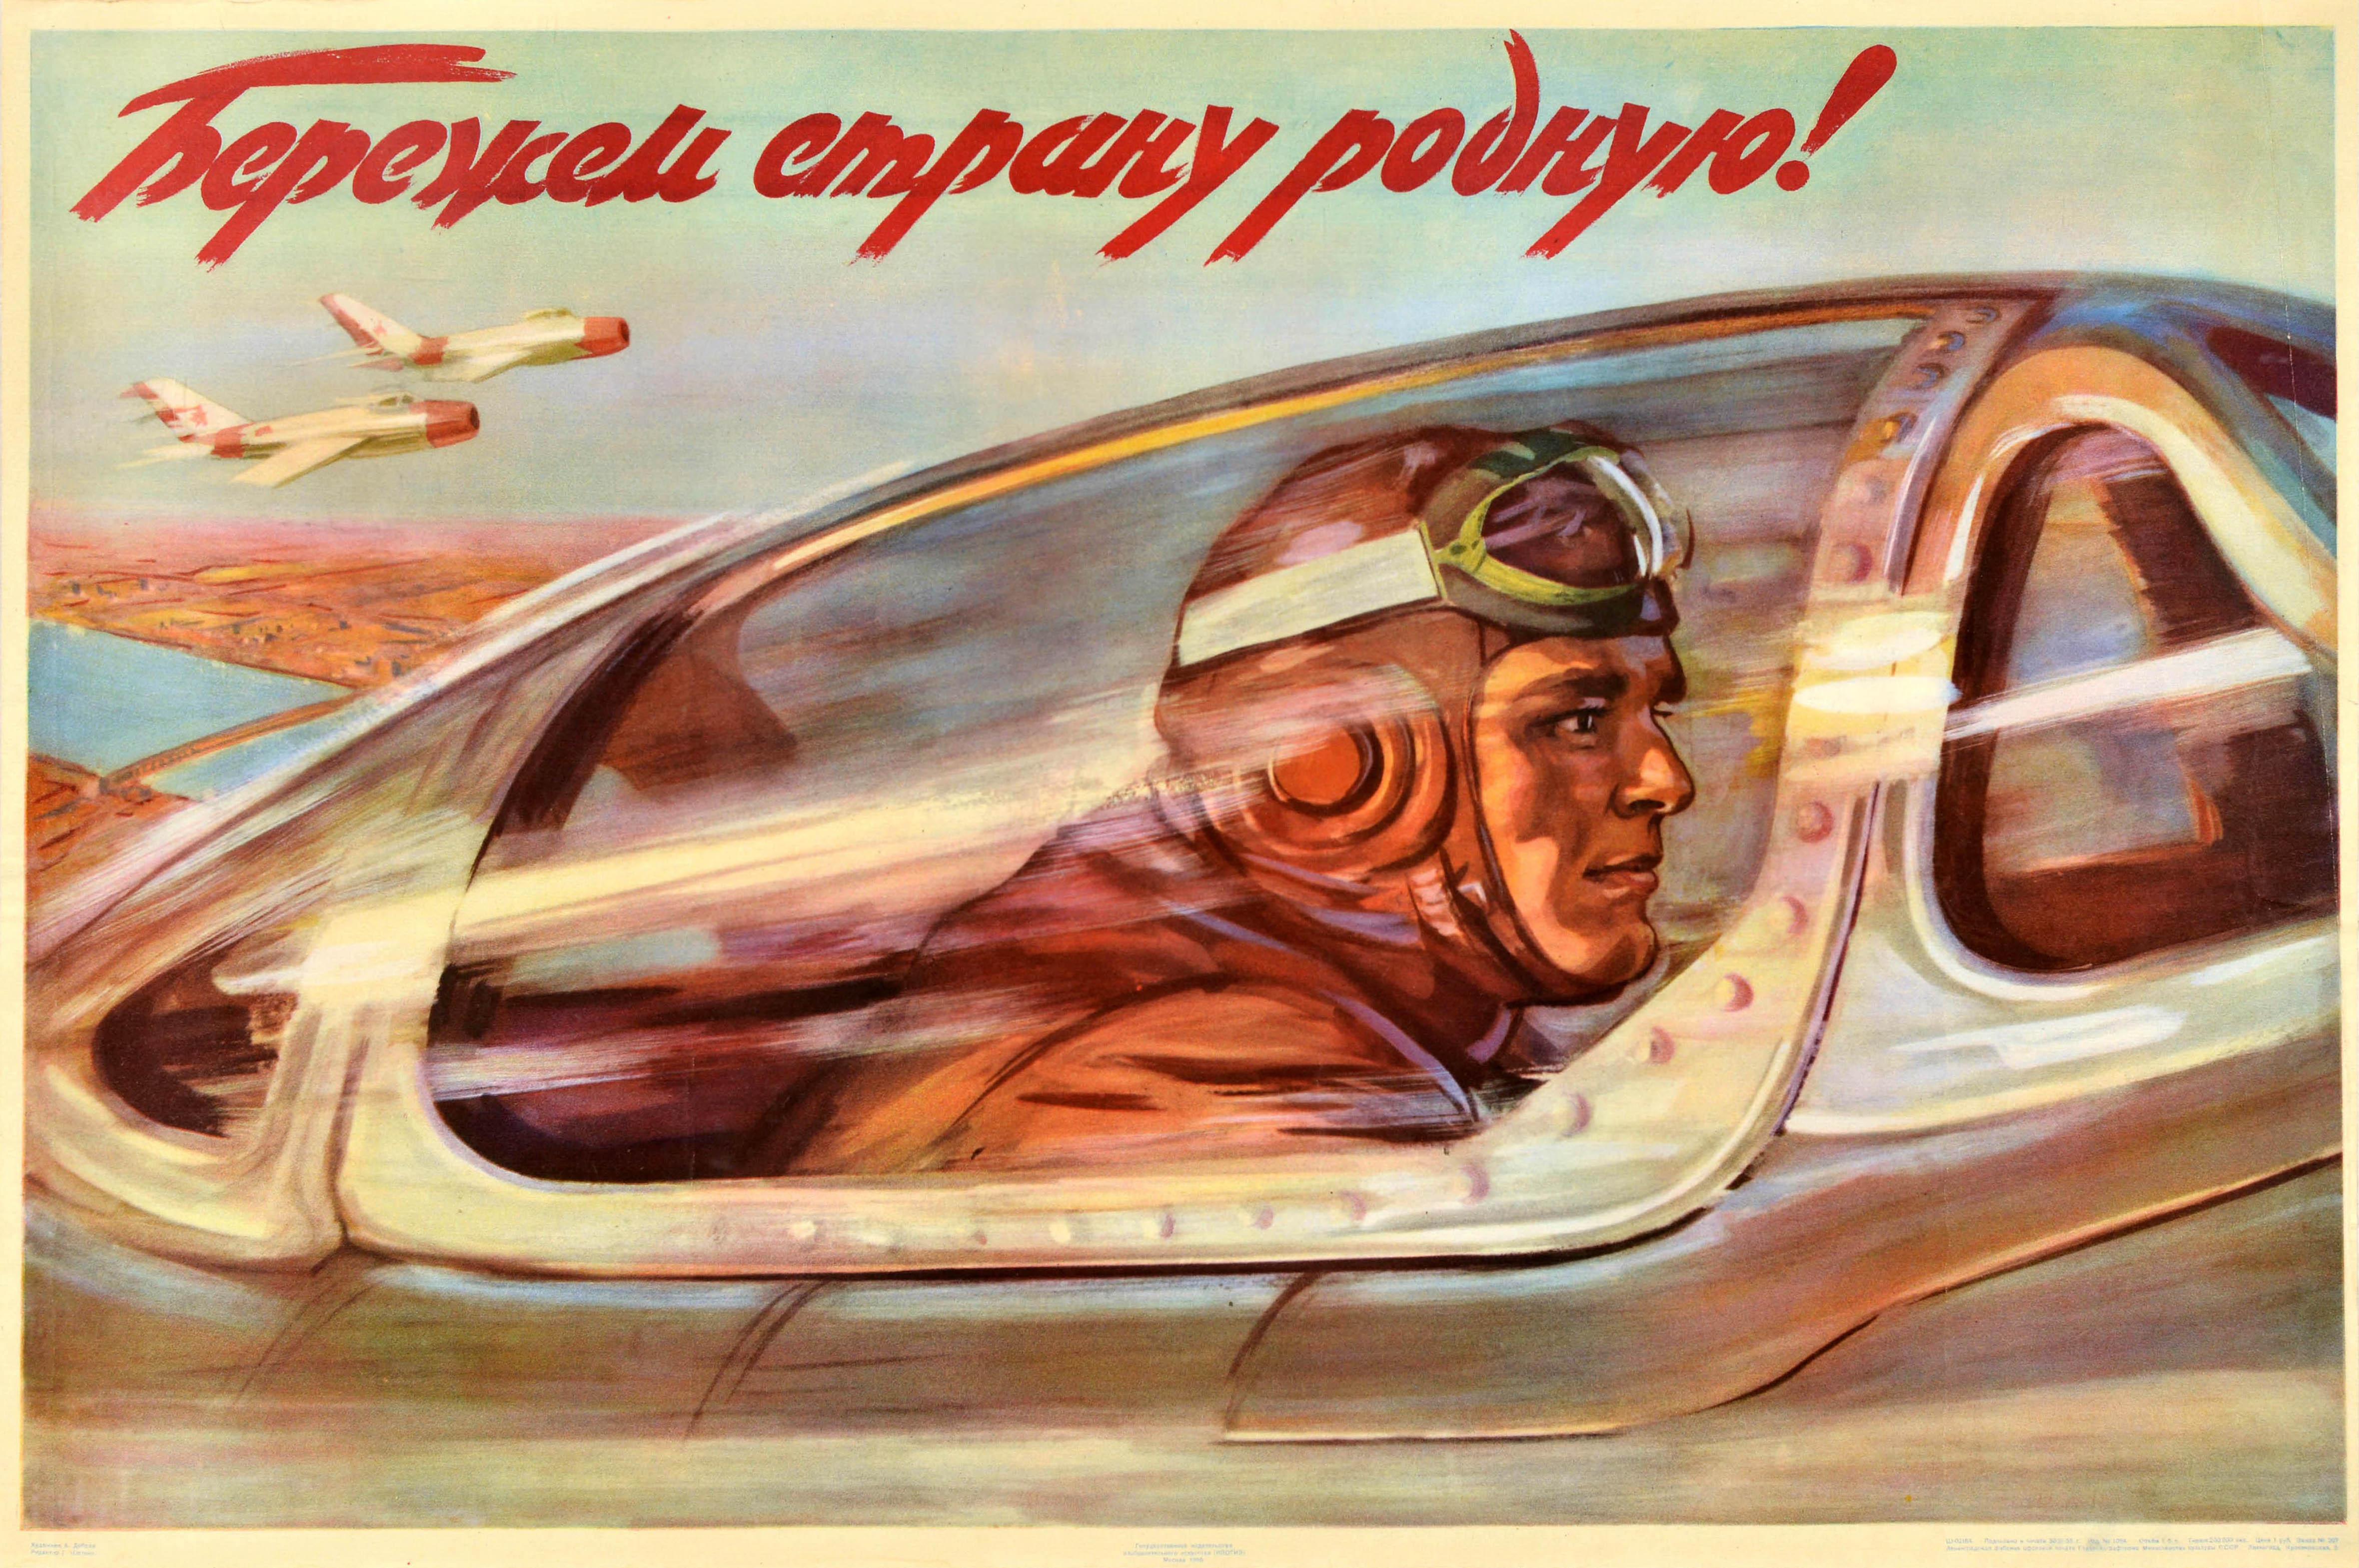 Unknown Print – Original Vintage Militärisches Propagandaplakat Pilot Protecting Homeland UdSSR, Original